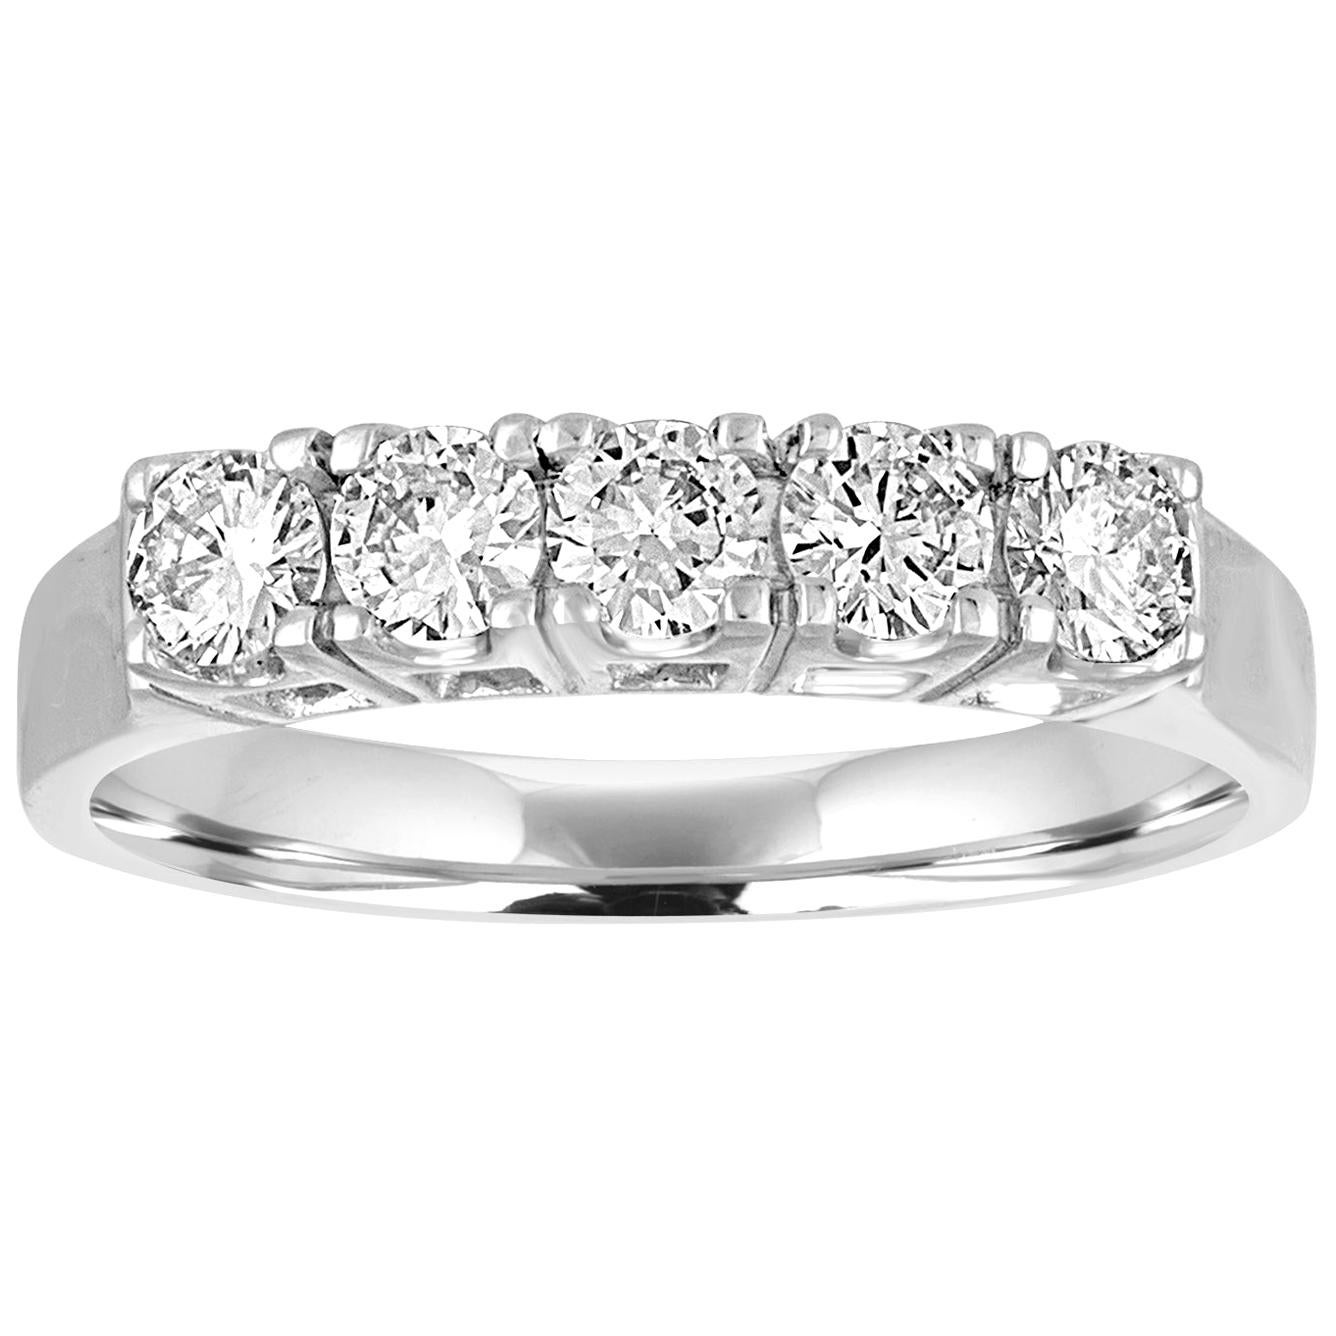 Diamond Stars Jewelry, Inc. Band Rings